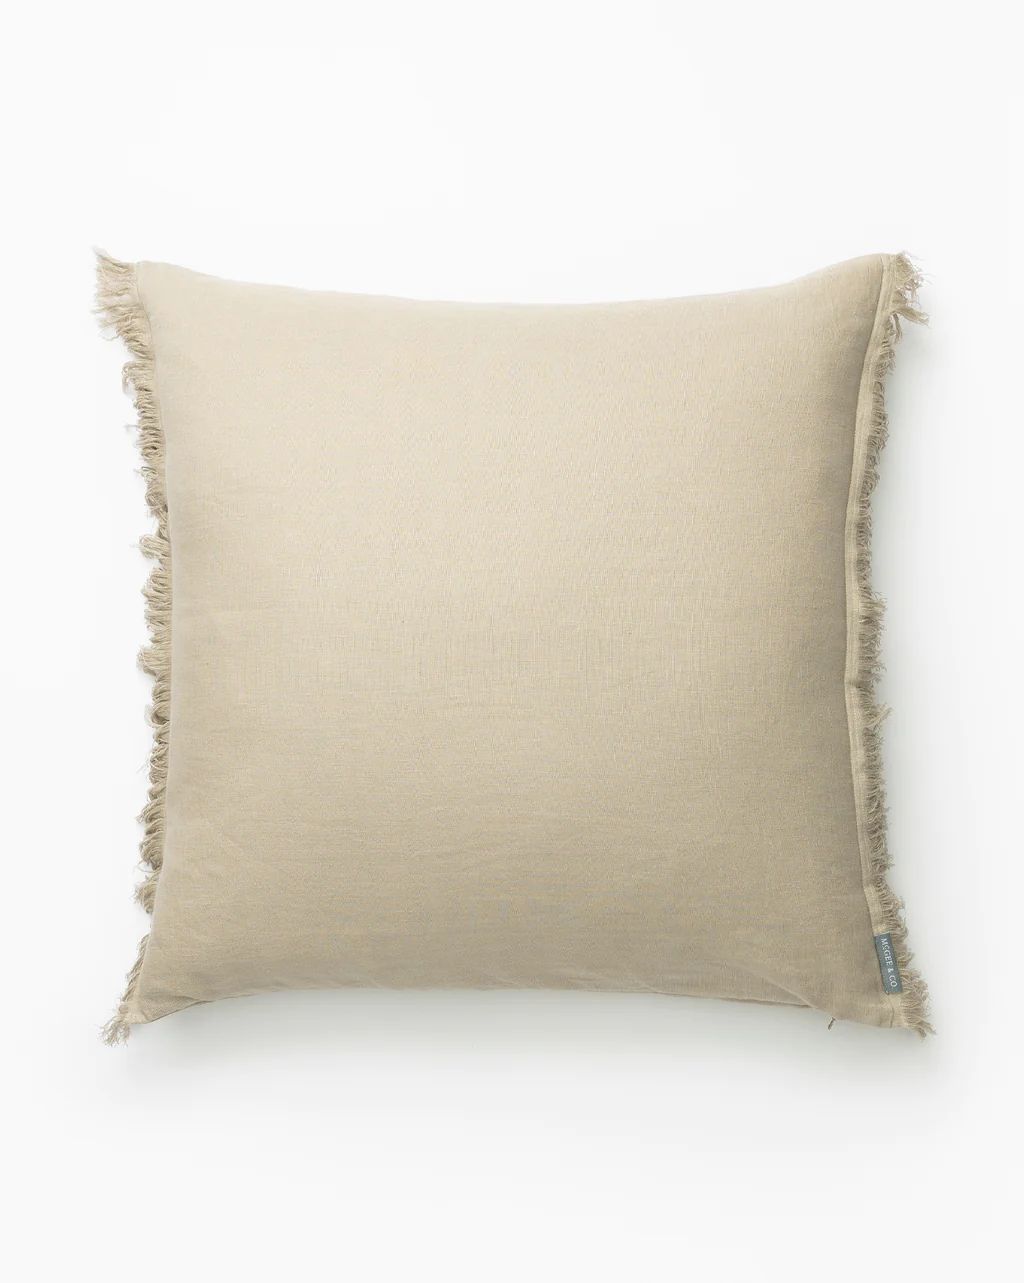 Hazelton Mushroom Fringed Pillow Cover | McGee & Co.